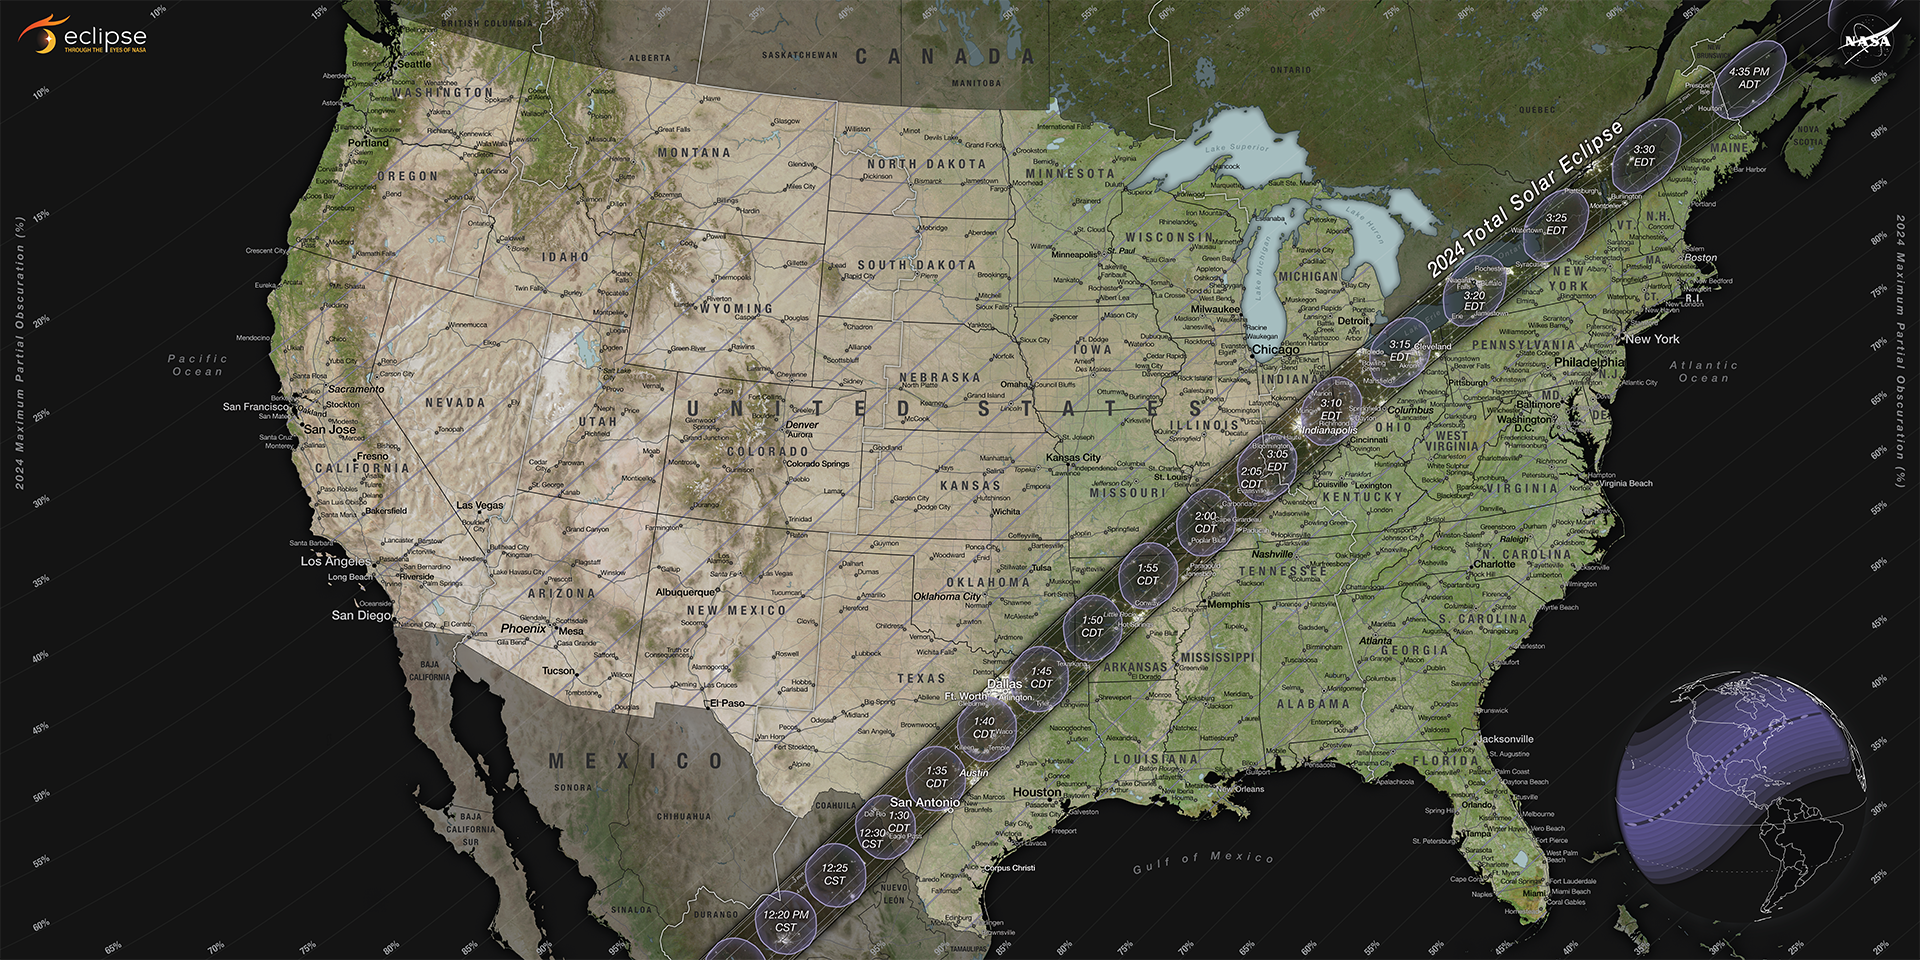 Minuto a minuto del “Gran Eclipse Solar Norteamericano”